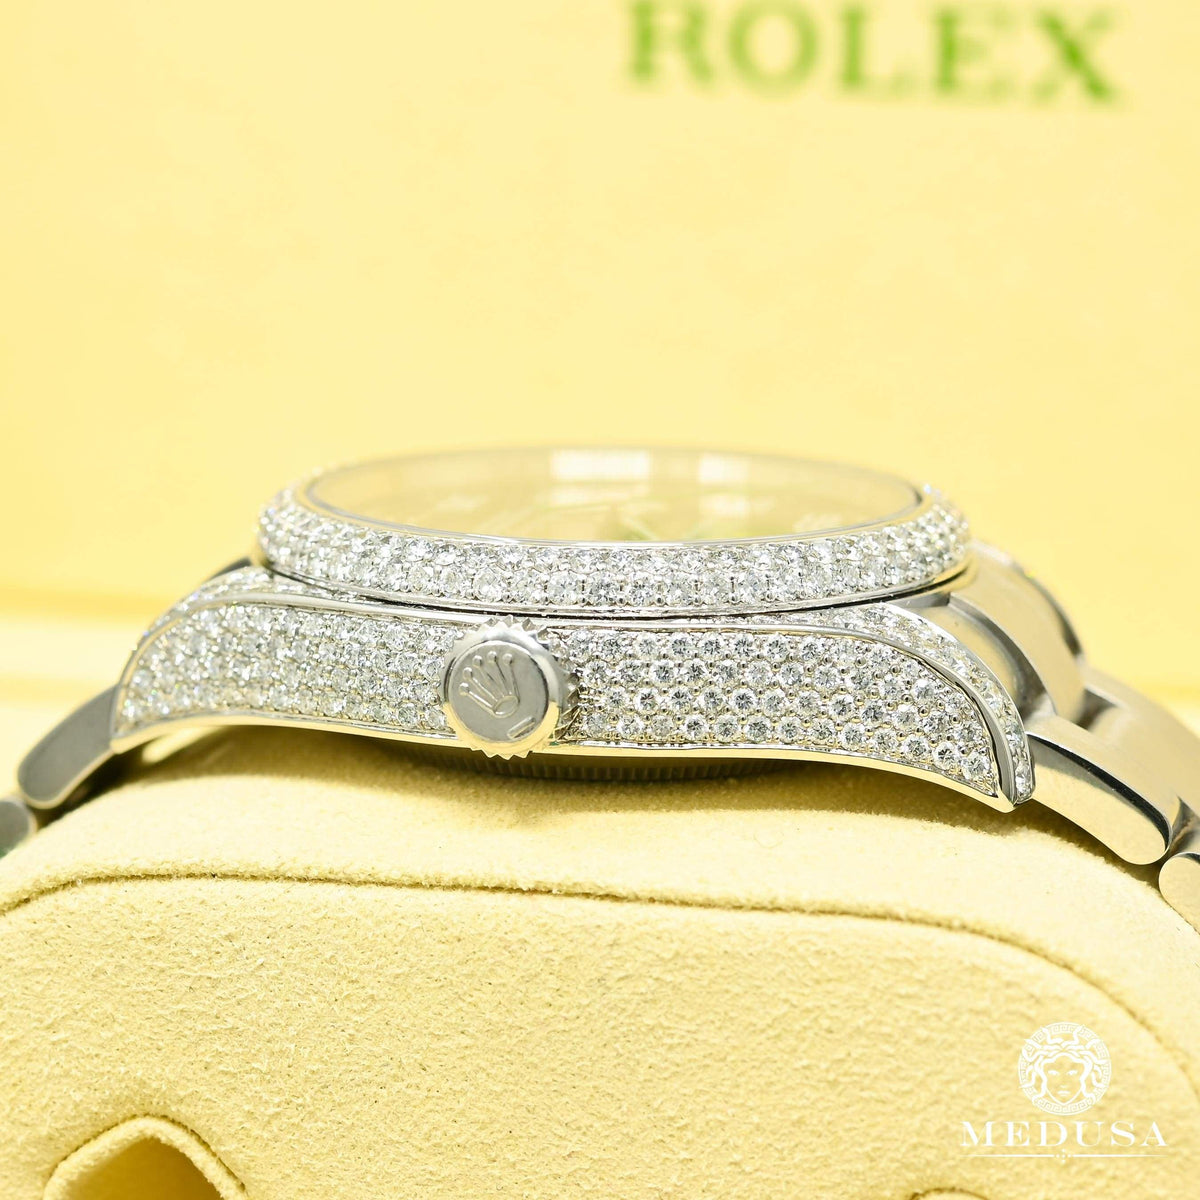 Montre Rolex | Montre Homme Rolex Air-King 40mm - Honeycomb Case Stainless